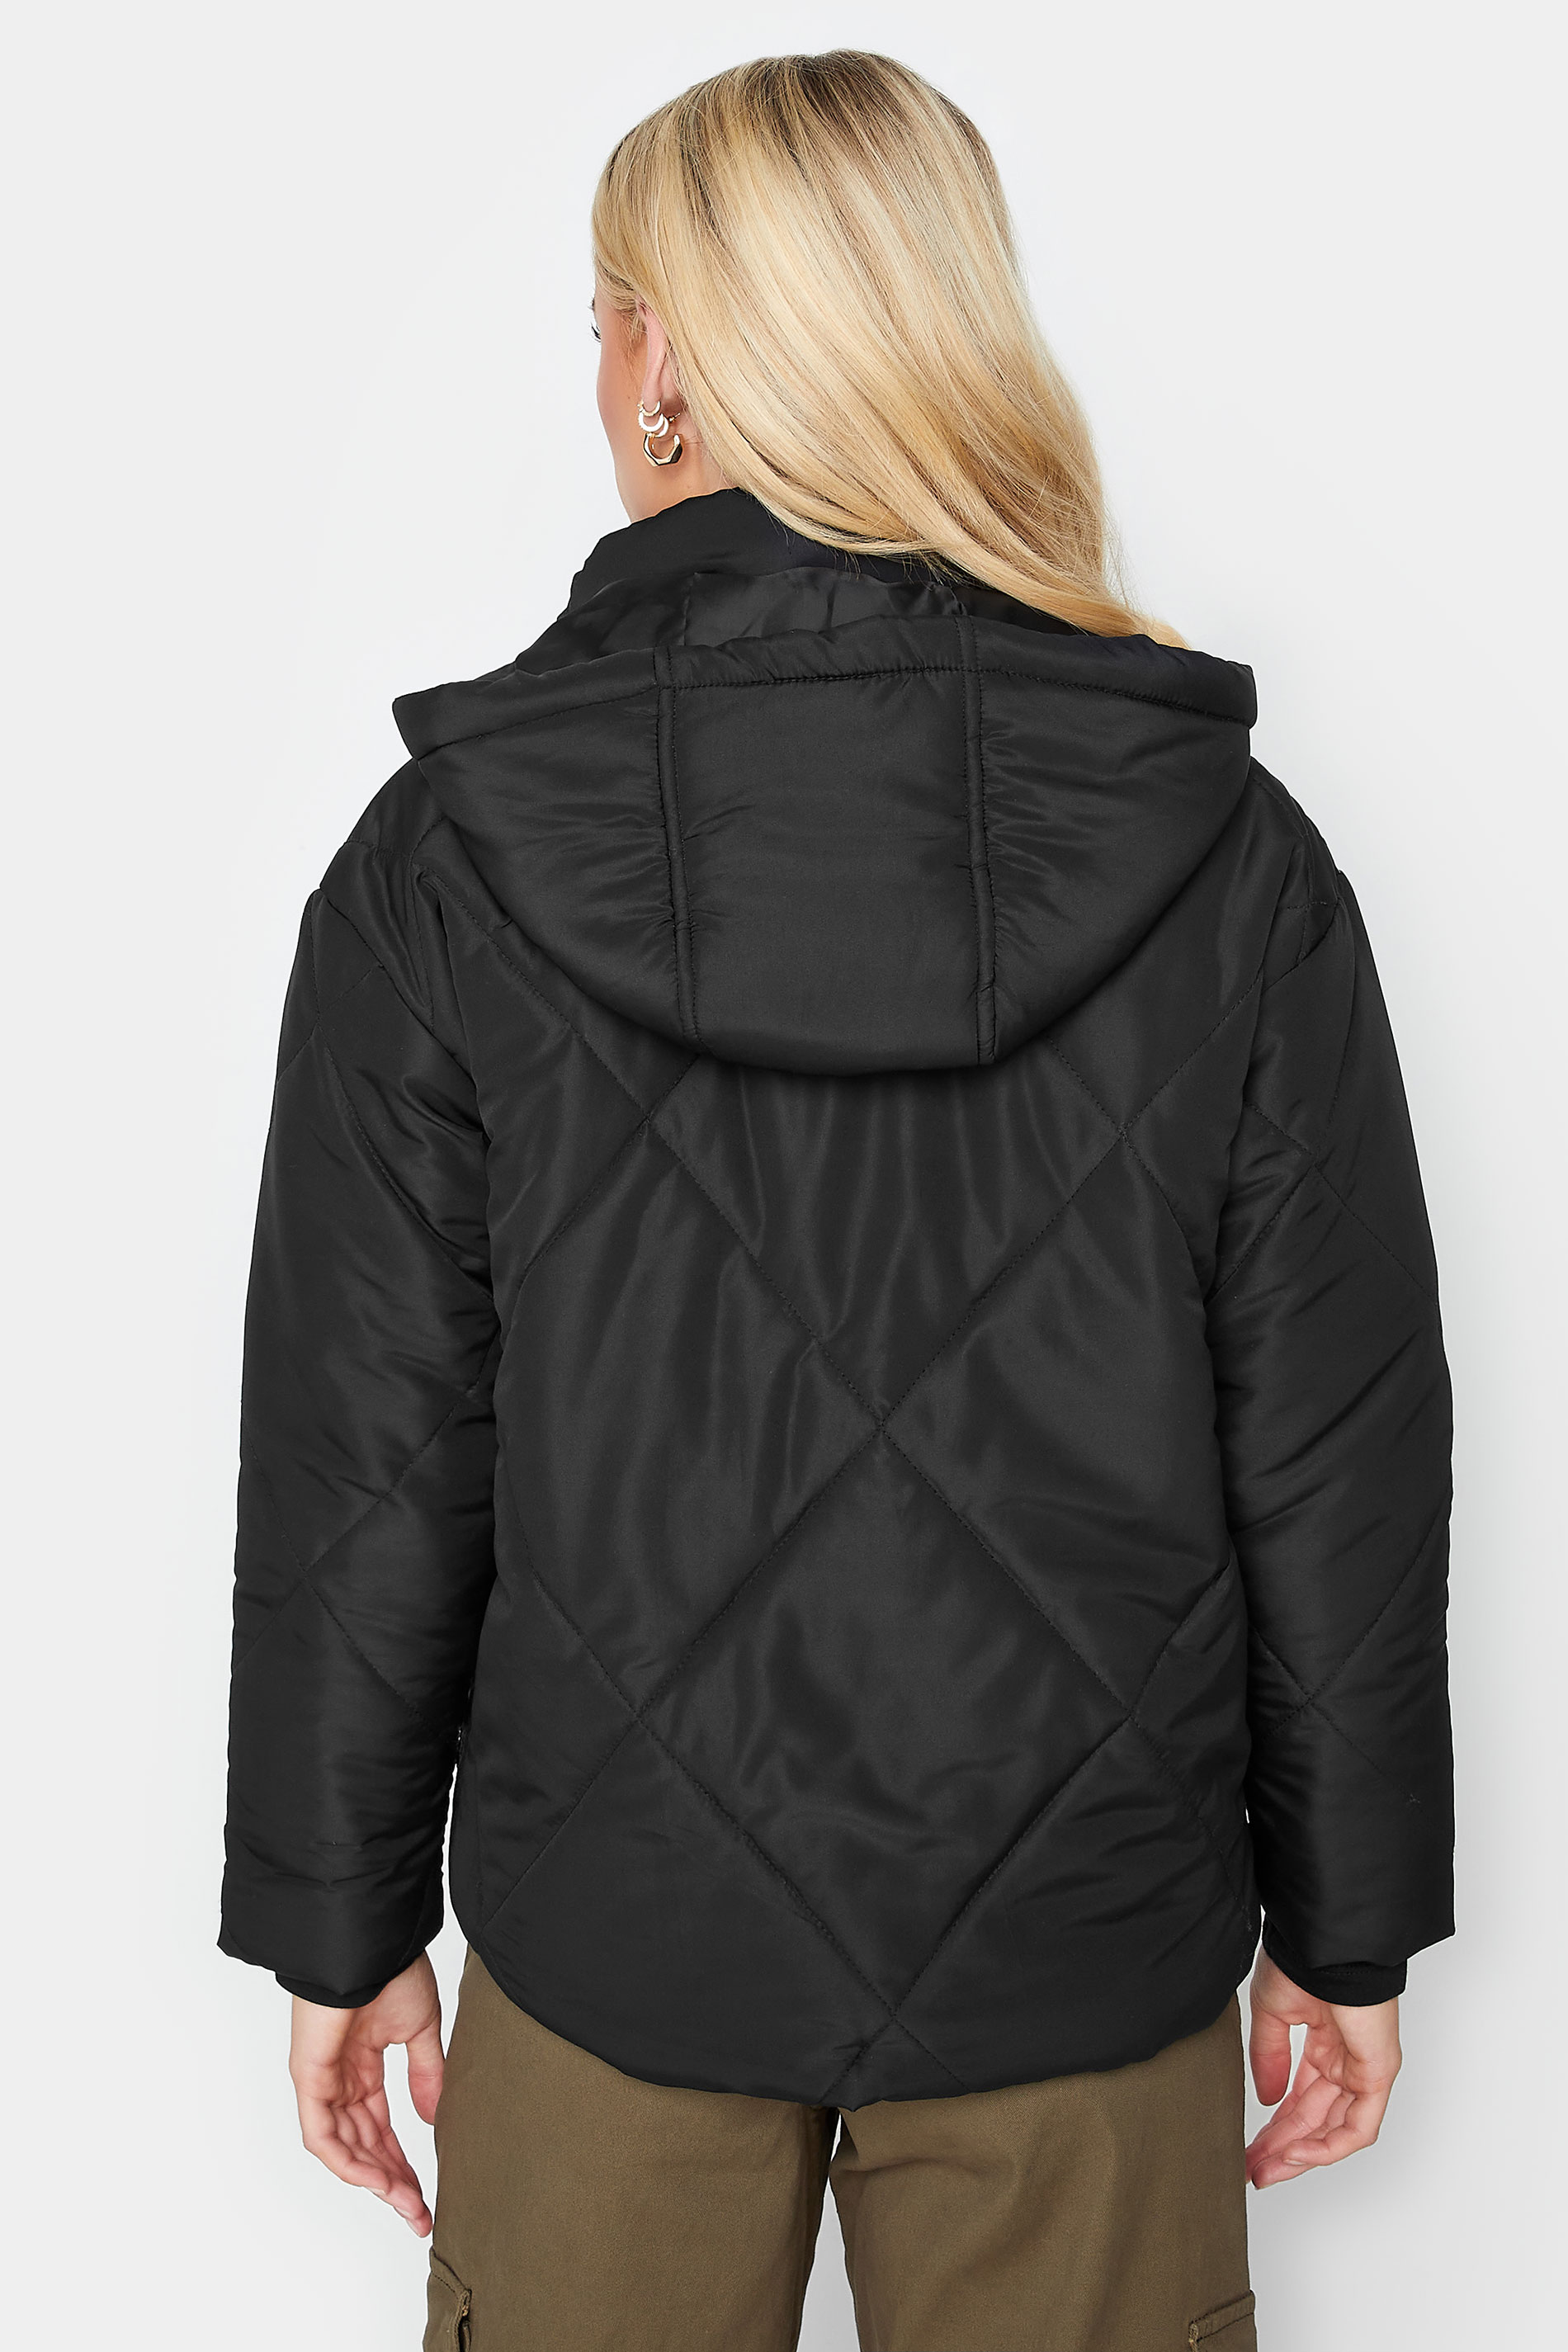 Petite Black Quilted Puffer Jacket | PixieGirl  3